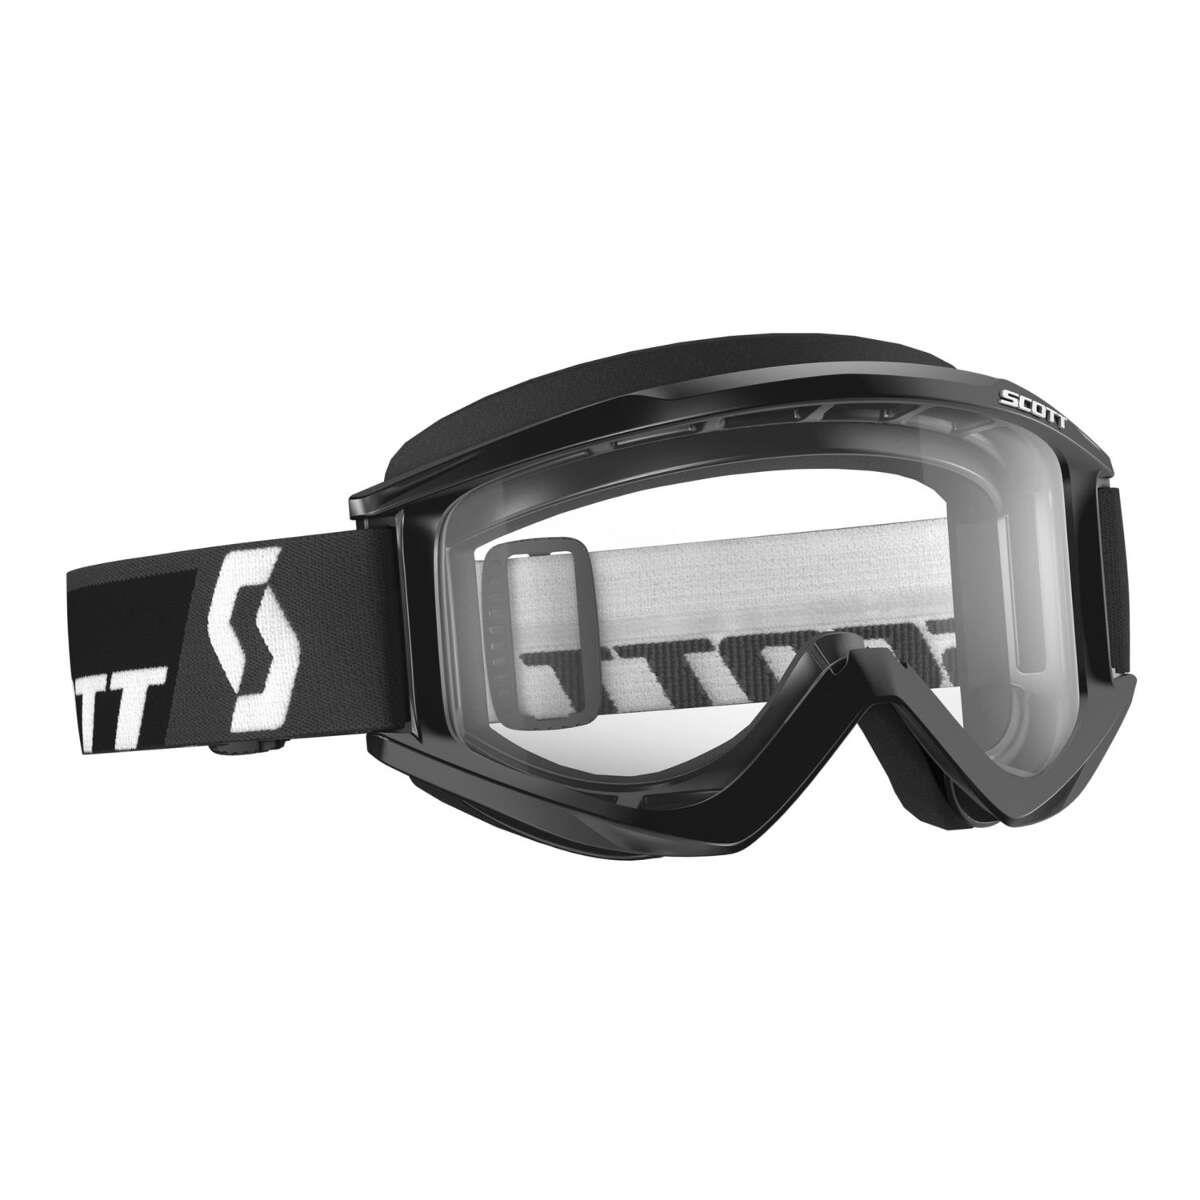 Scott Goggle Recoil Xi Black - Clear Anti-Fog